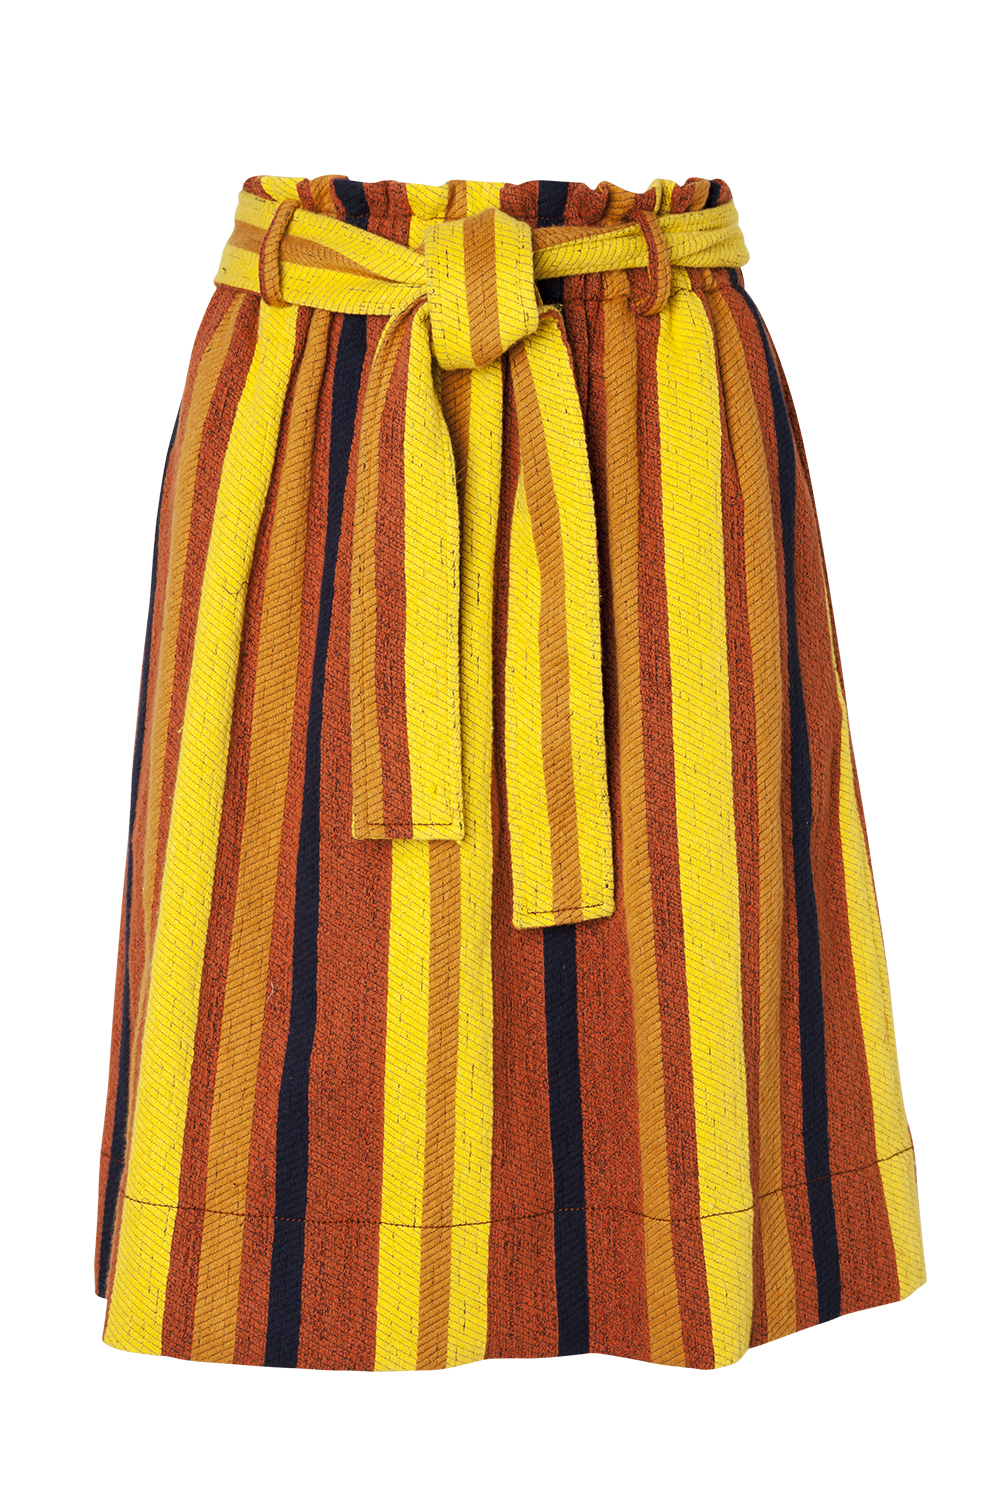 Skirt, $495, by Karen Walker.